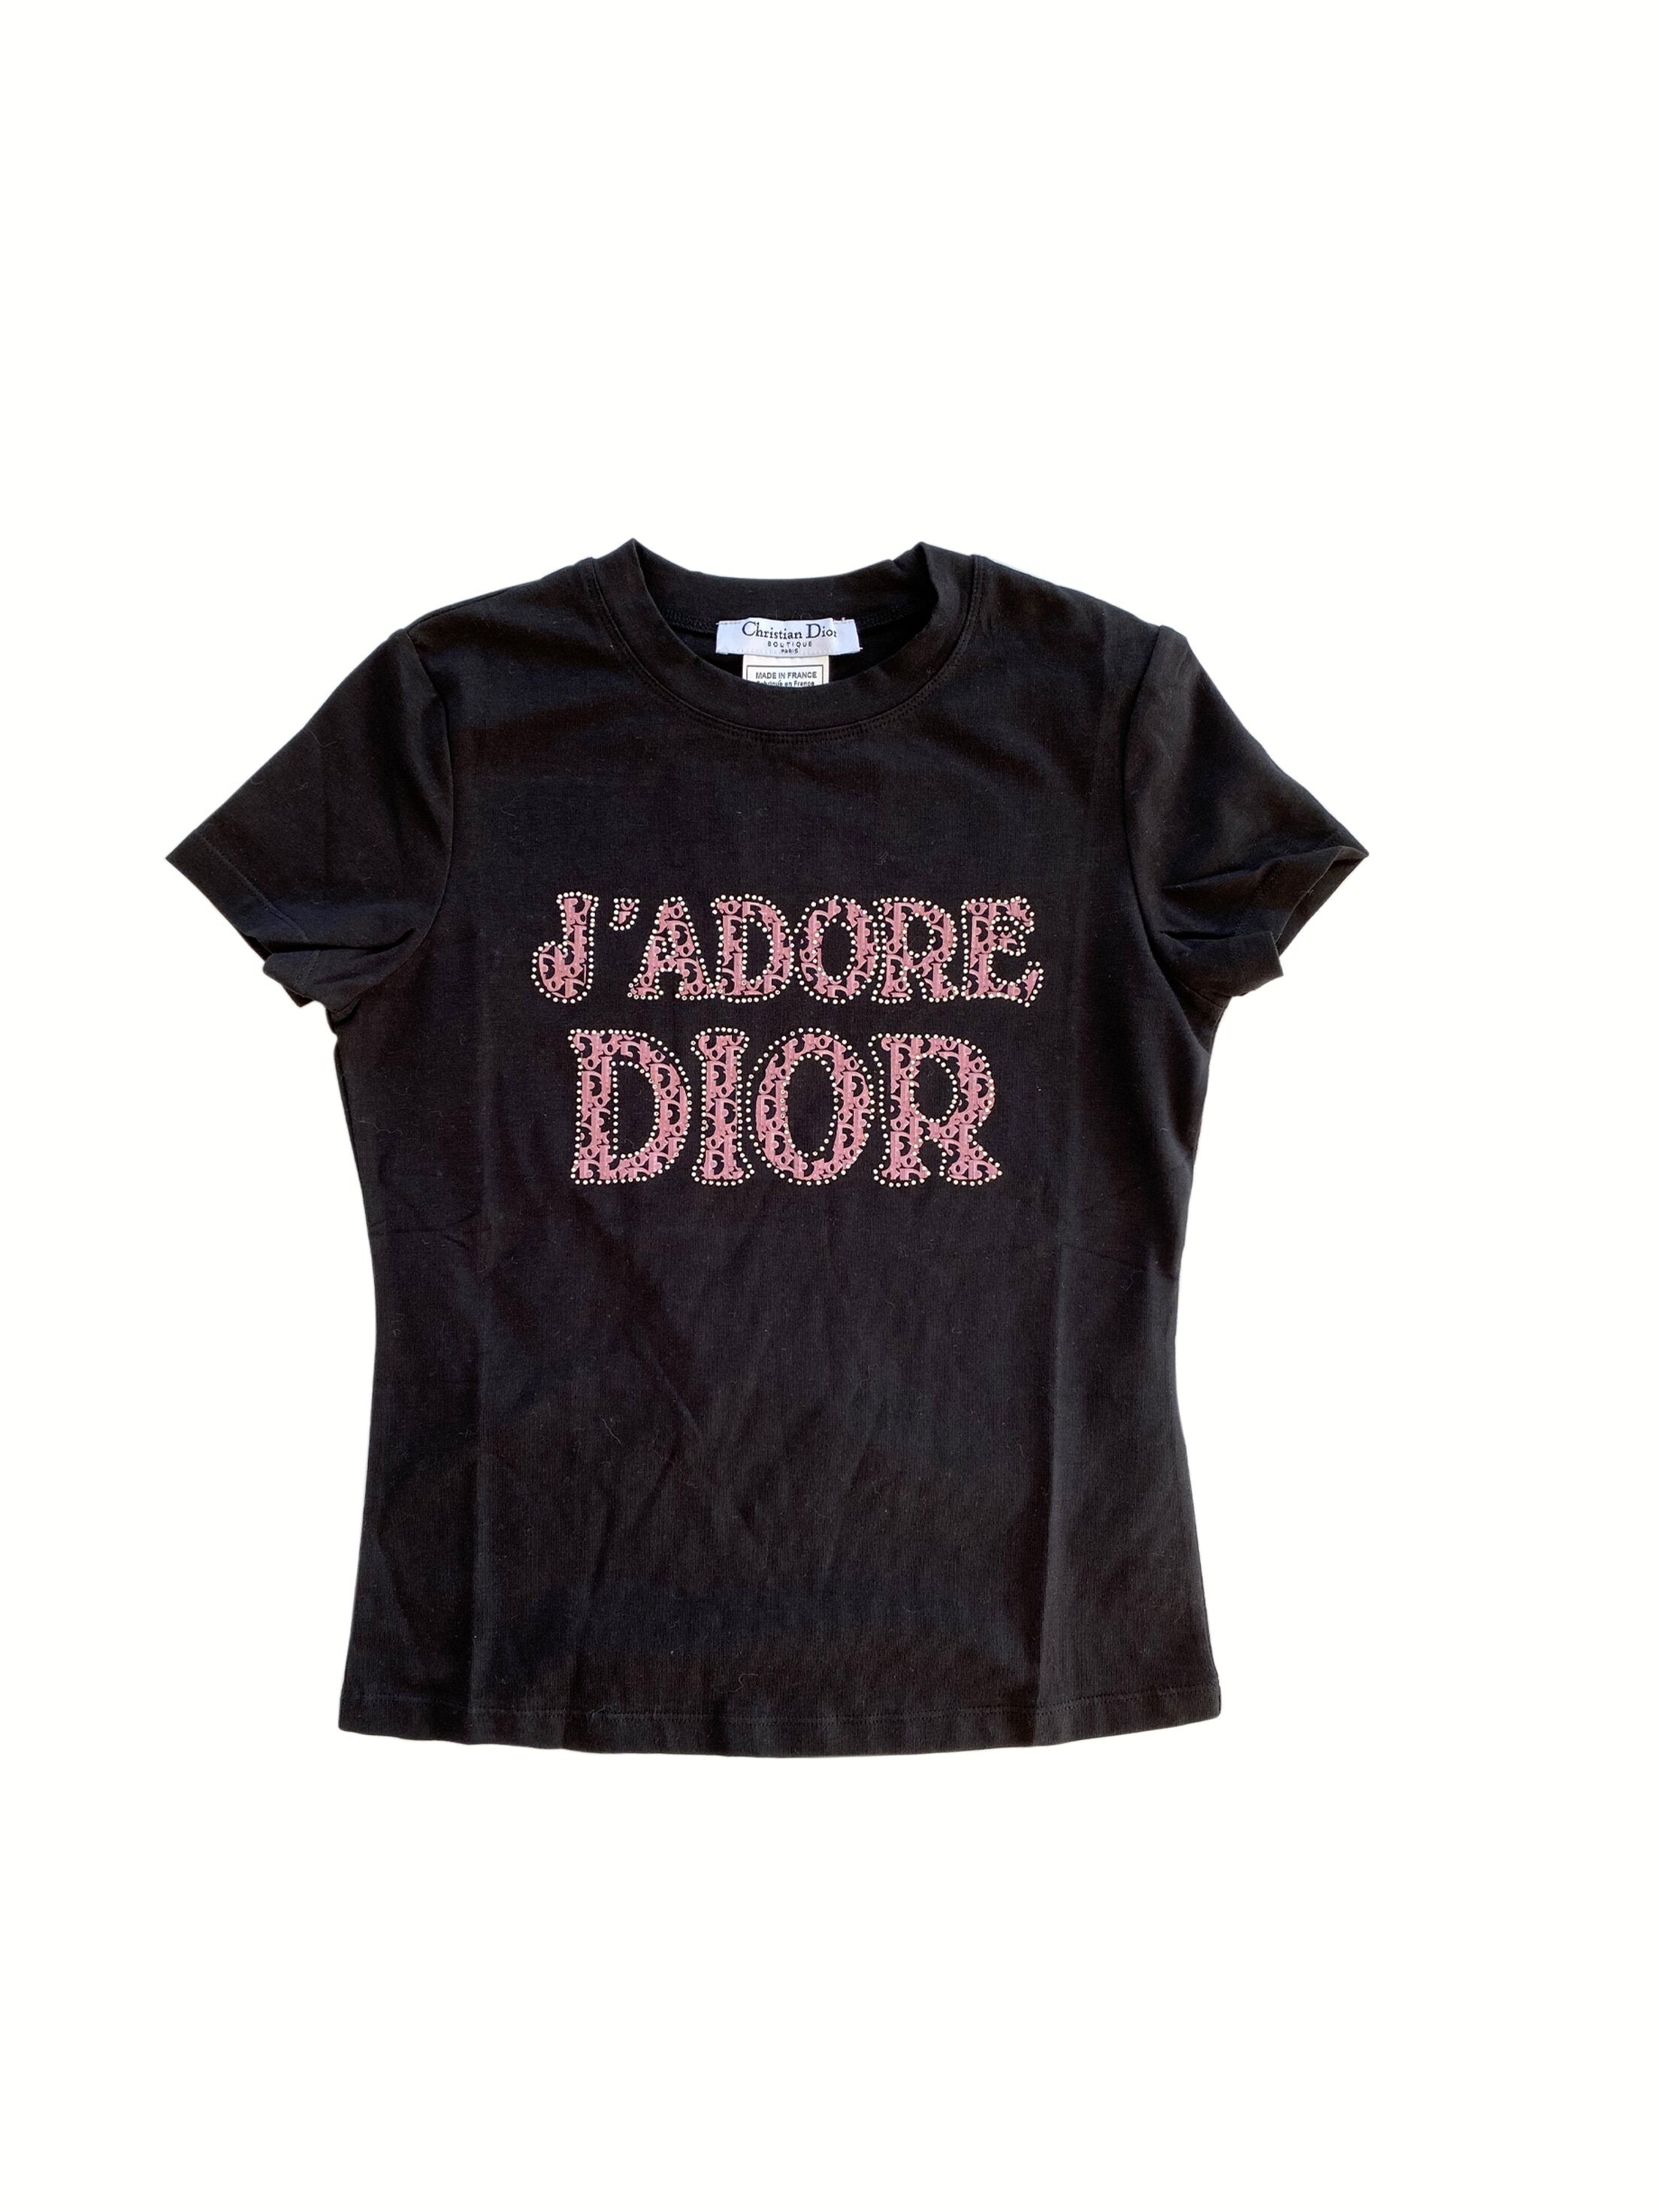 Christian Dior  JADORE Short Sleeve Top  Gallery213